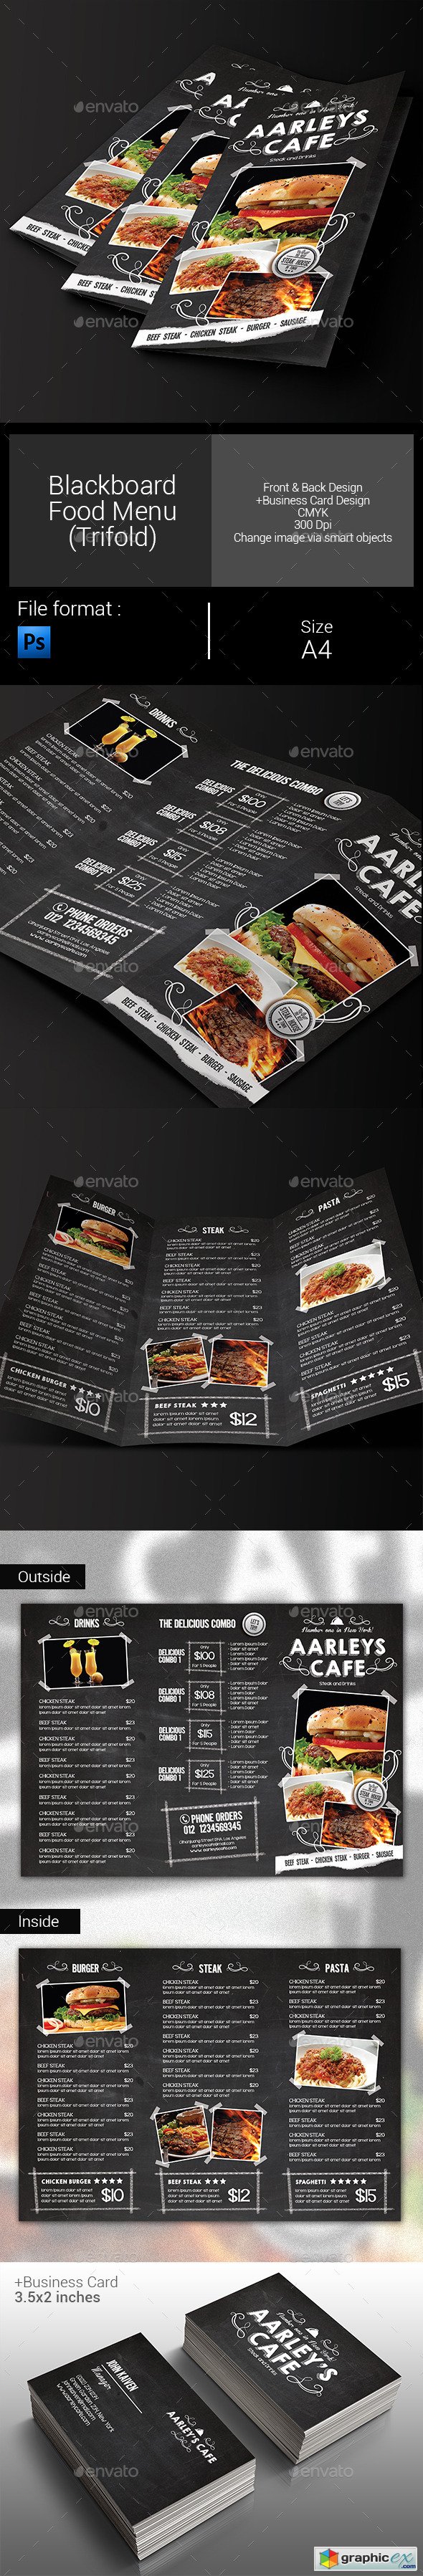 Blackboard Food Menu (Trifold) + Business Card